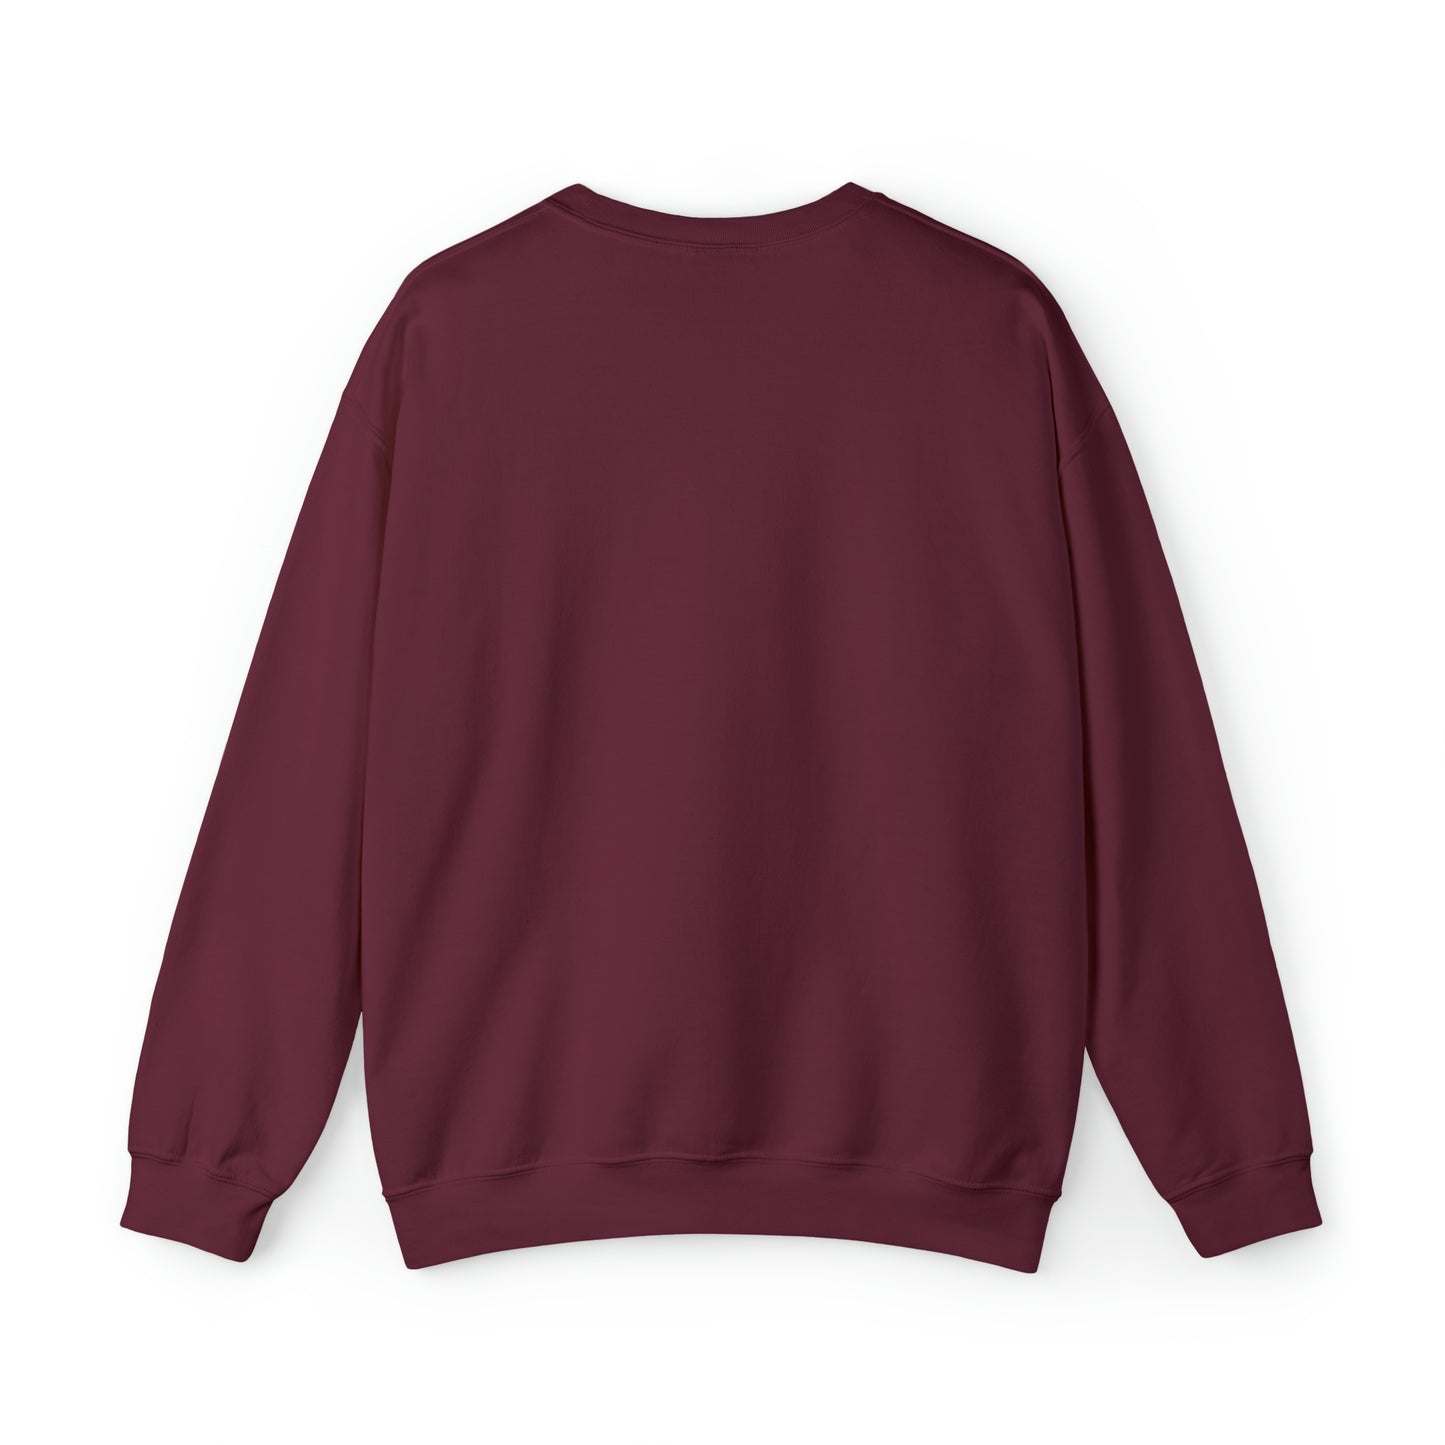 Pluck Cancer Women's Heavy Blend™ Crewneck Sweatshirt - Maroon